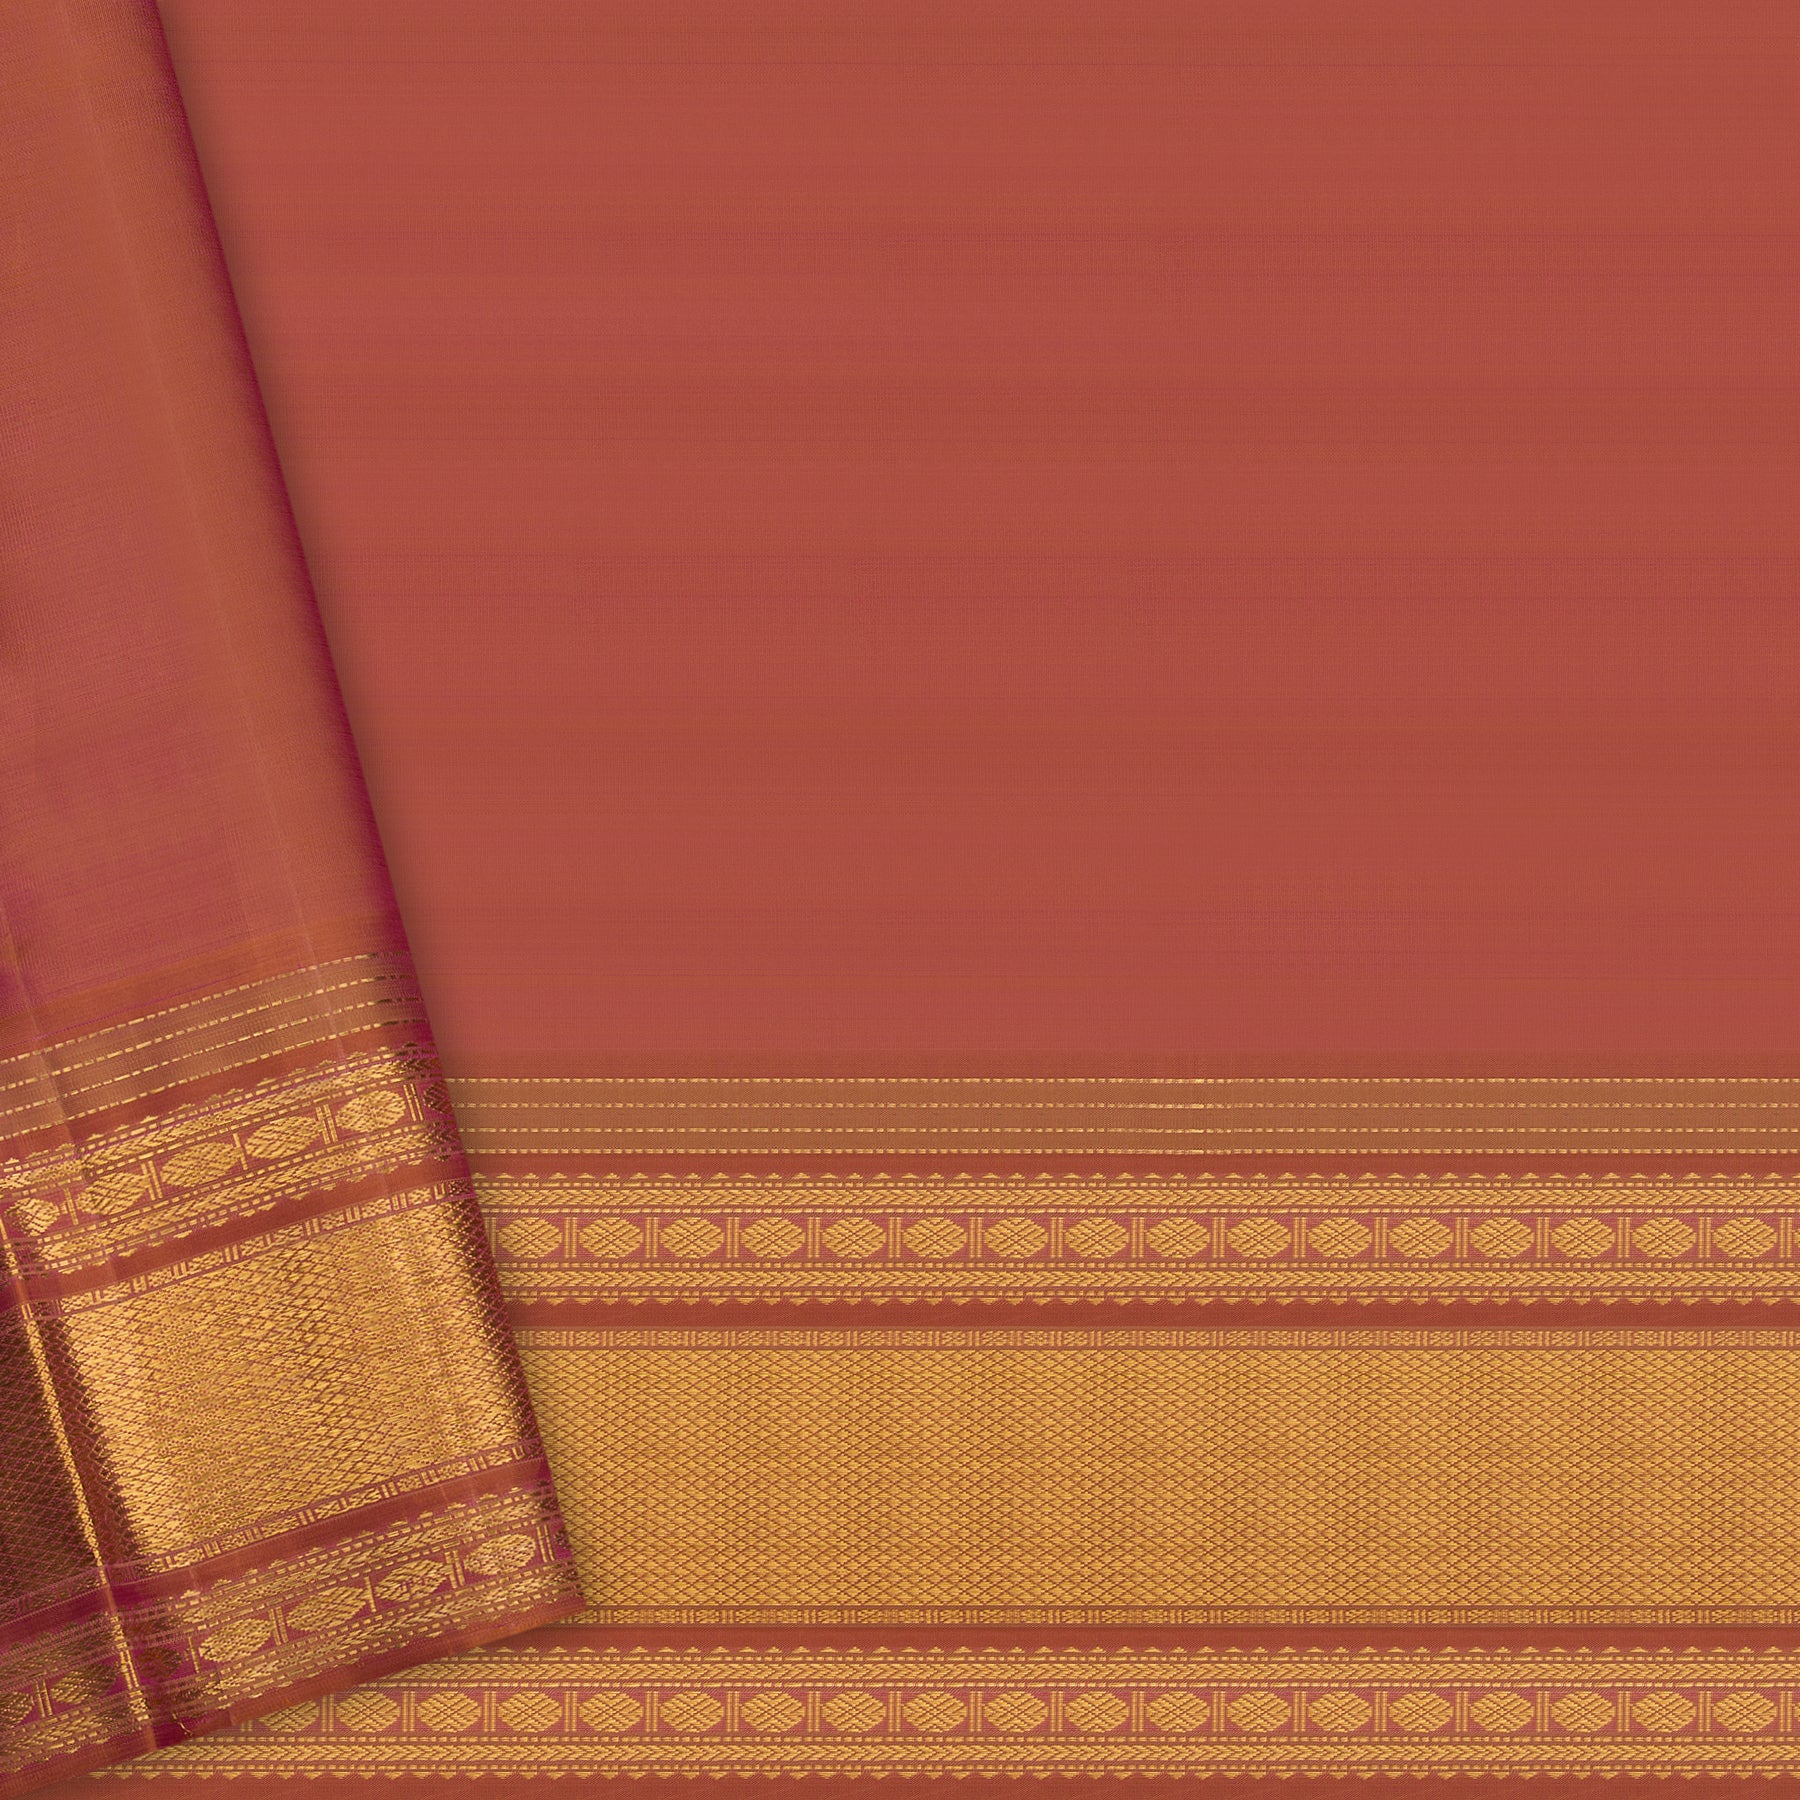 Kanakavalli Kanjivaram Silk Sari 23-040-HS001-03229 - Blouse View